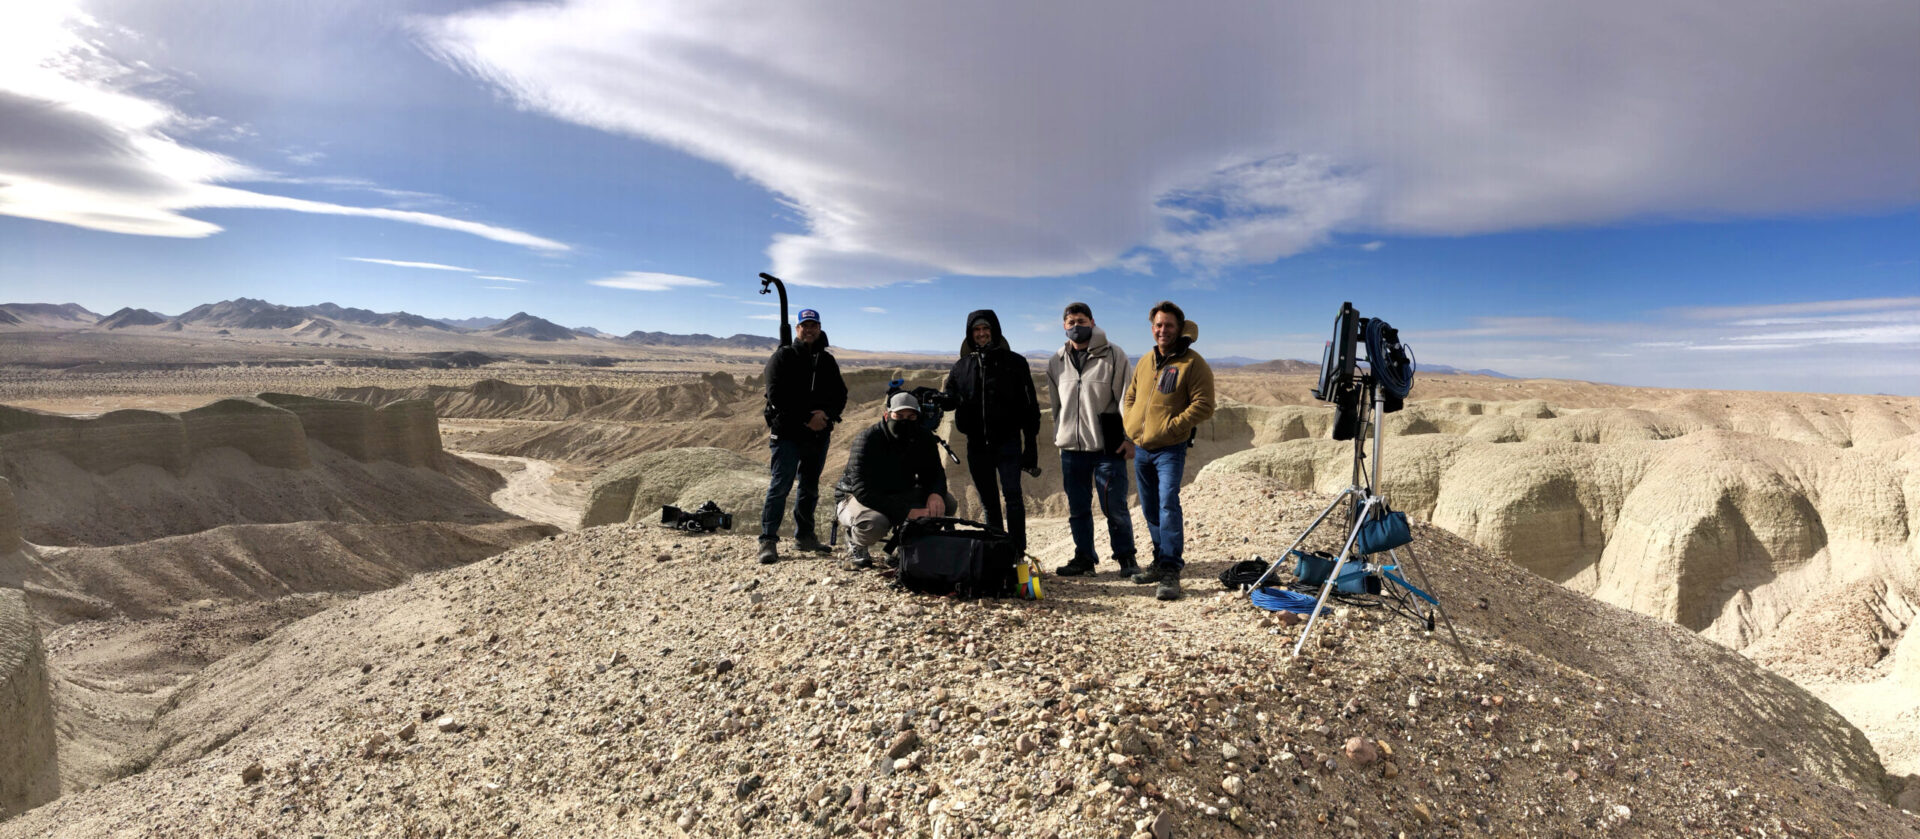 Camera crew in the desert.